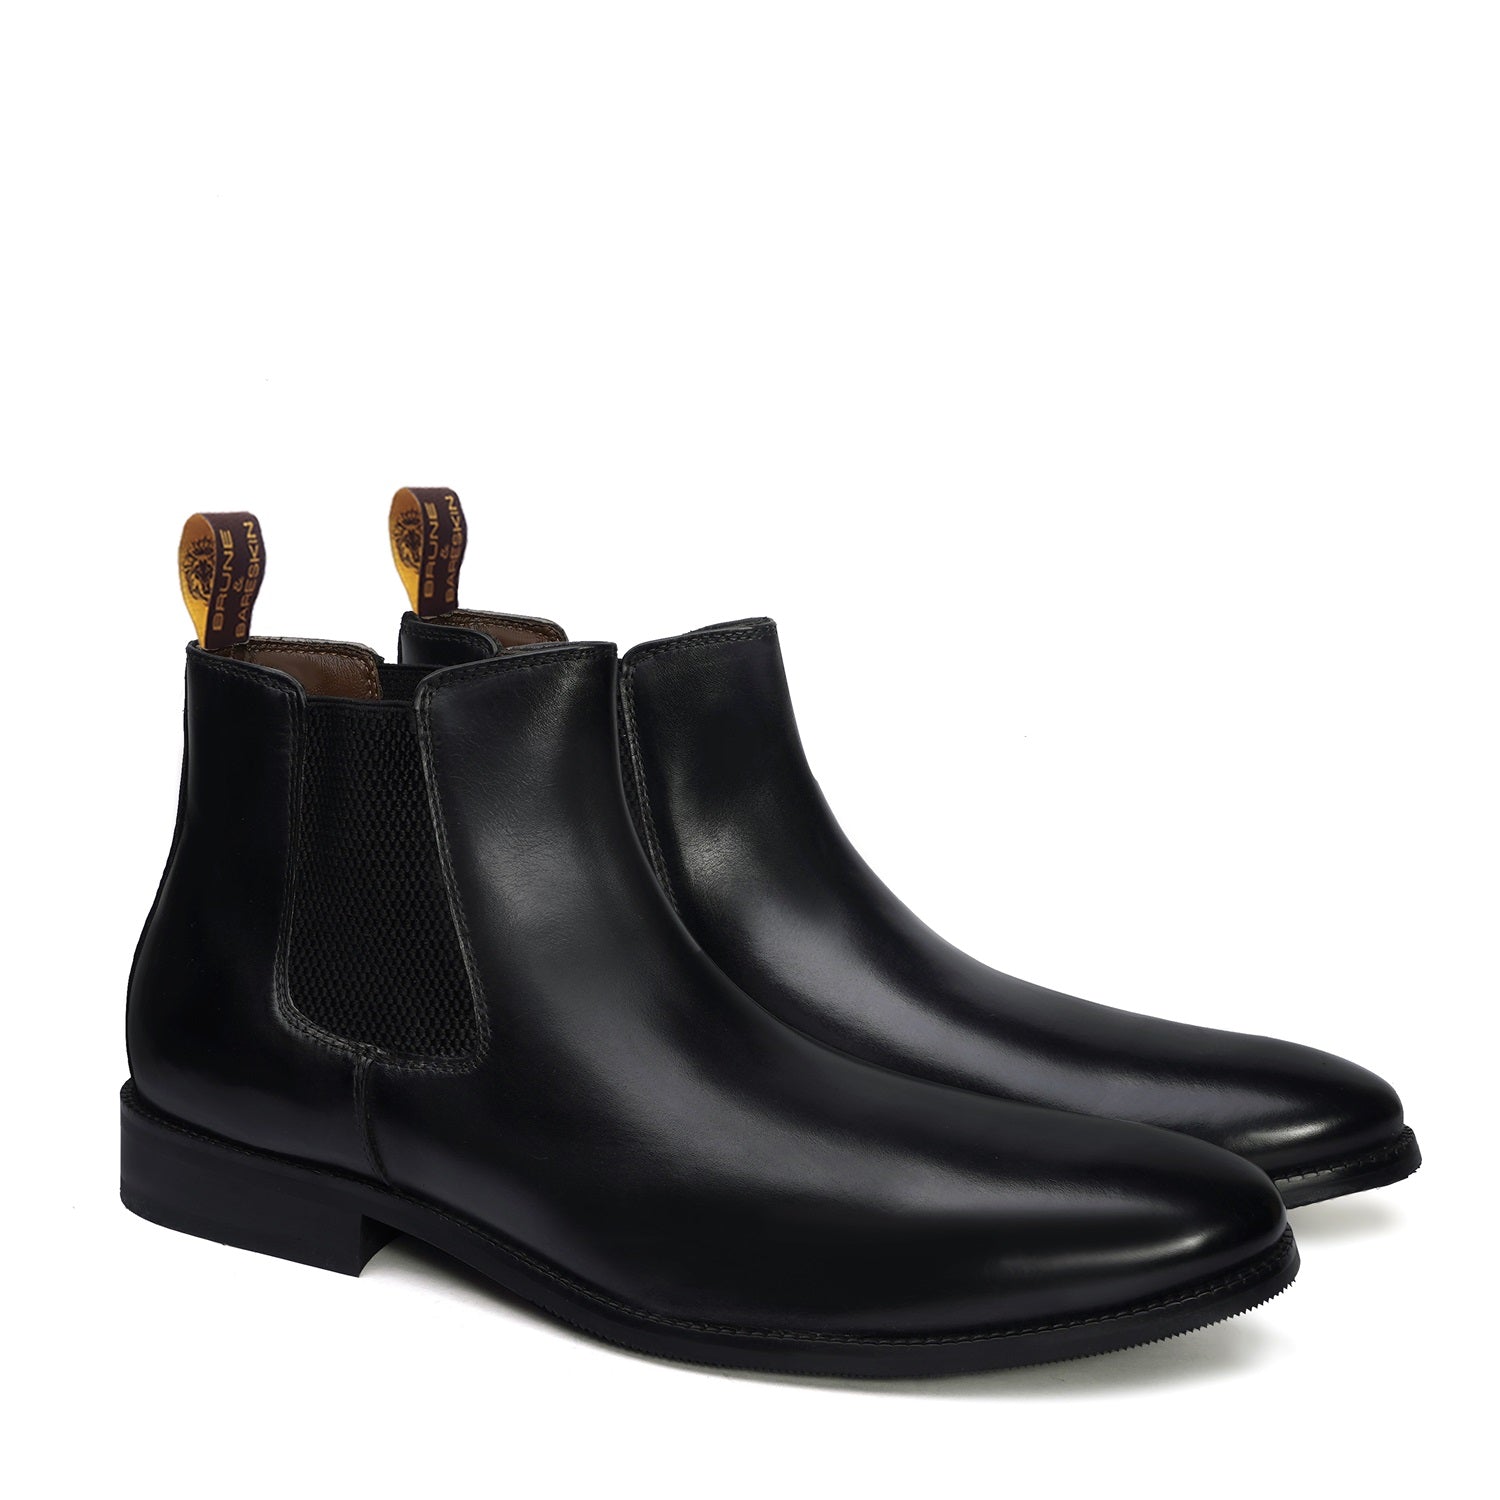 Black Leather Hand Made Chelsea Boots For Men By Brune & Bareskin